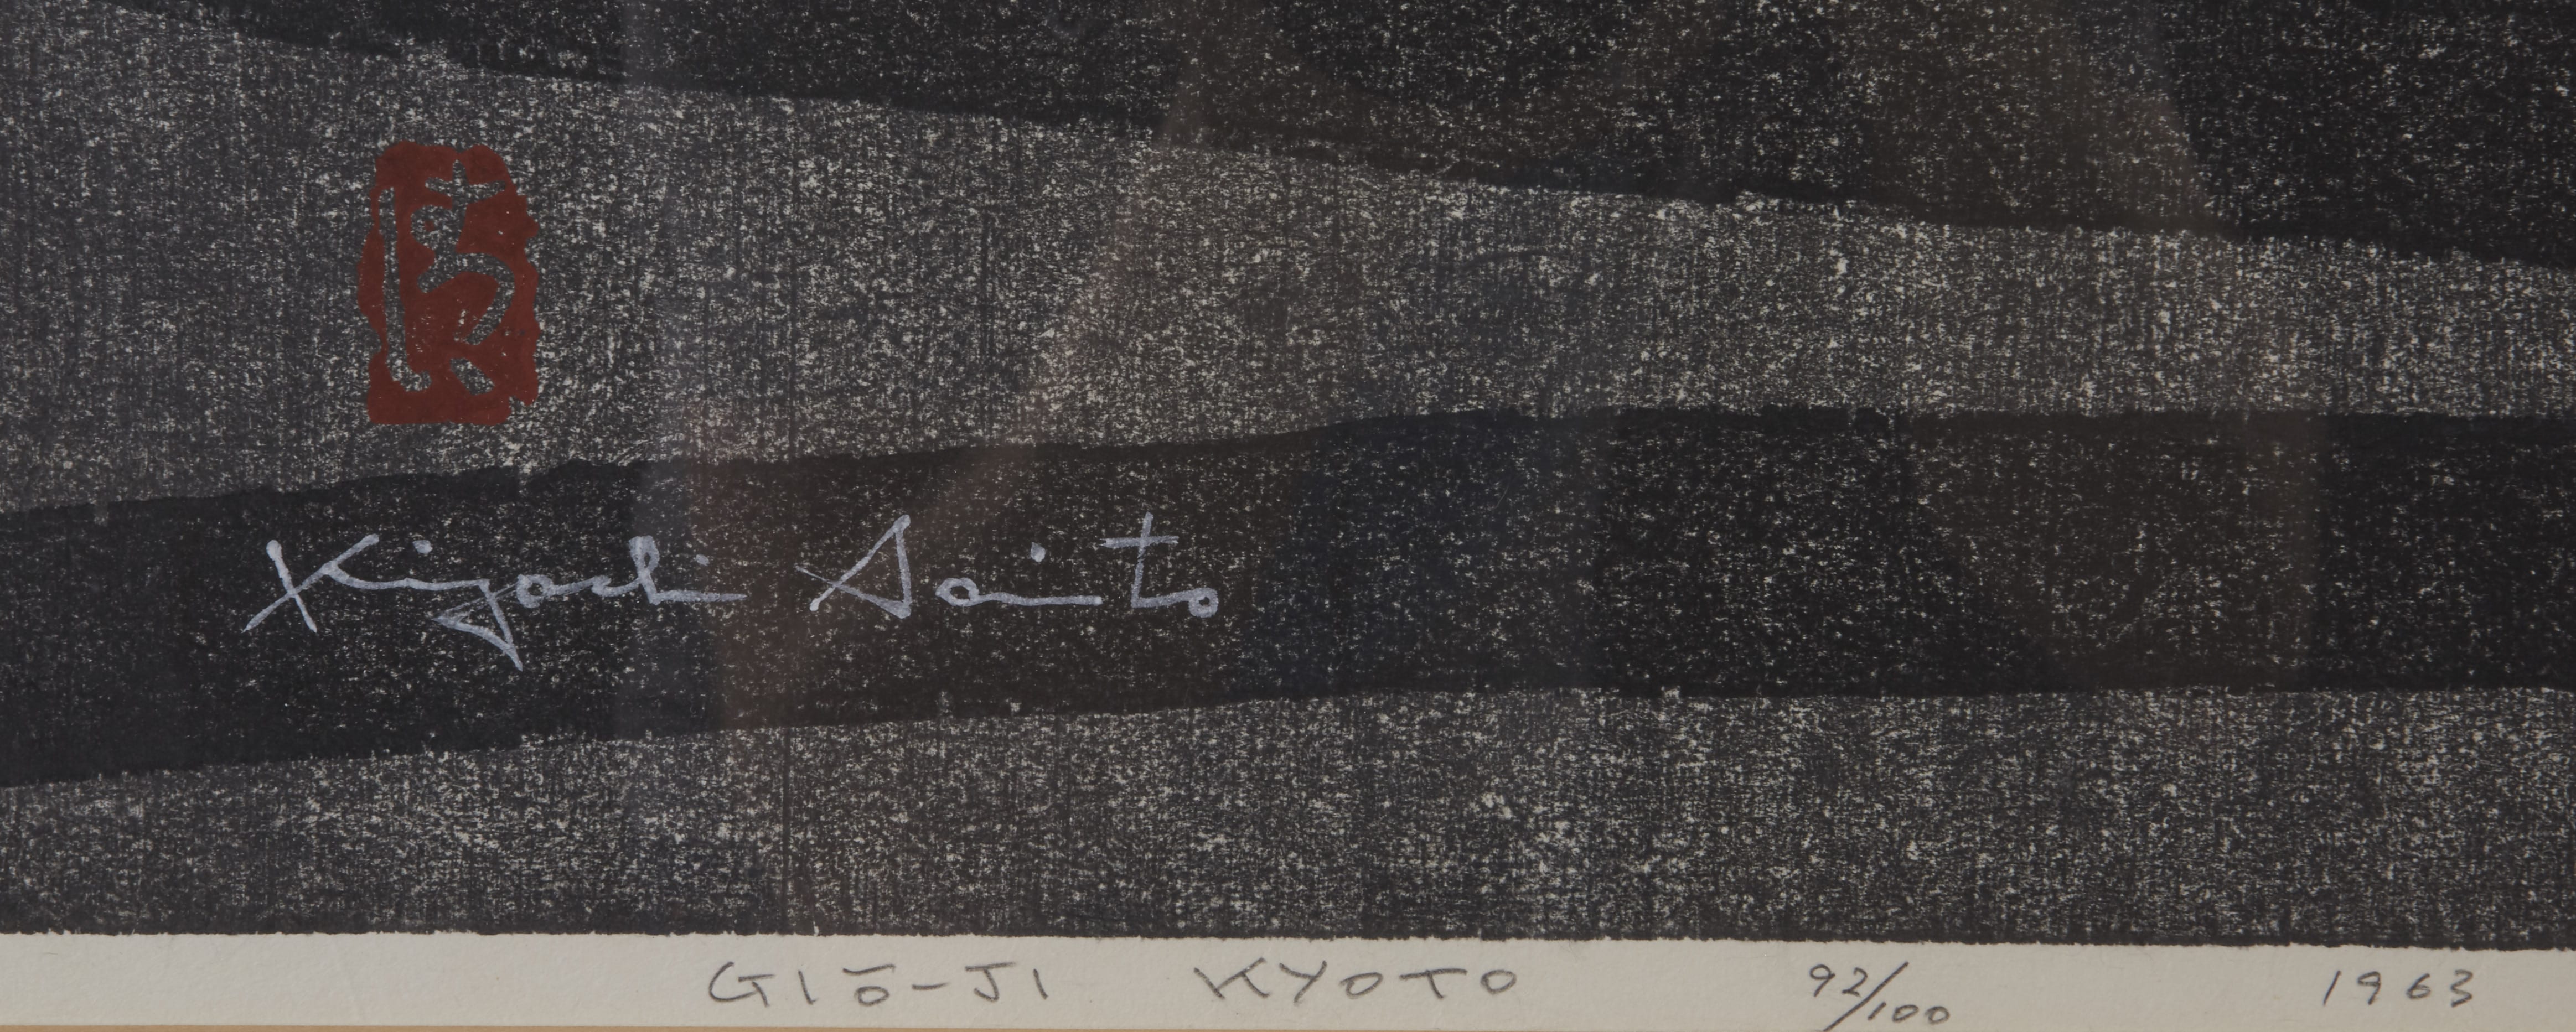 Lot 271: Kiyoshi Saito Color Woodblock Print "Gio-Ji Kyoto" 1963